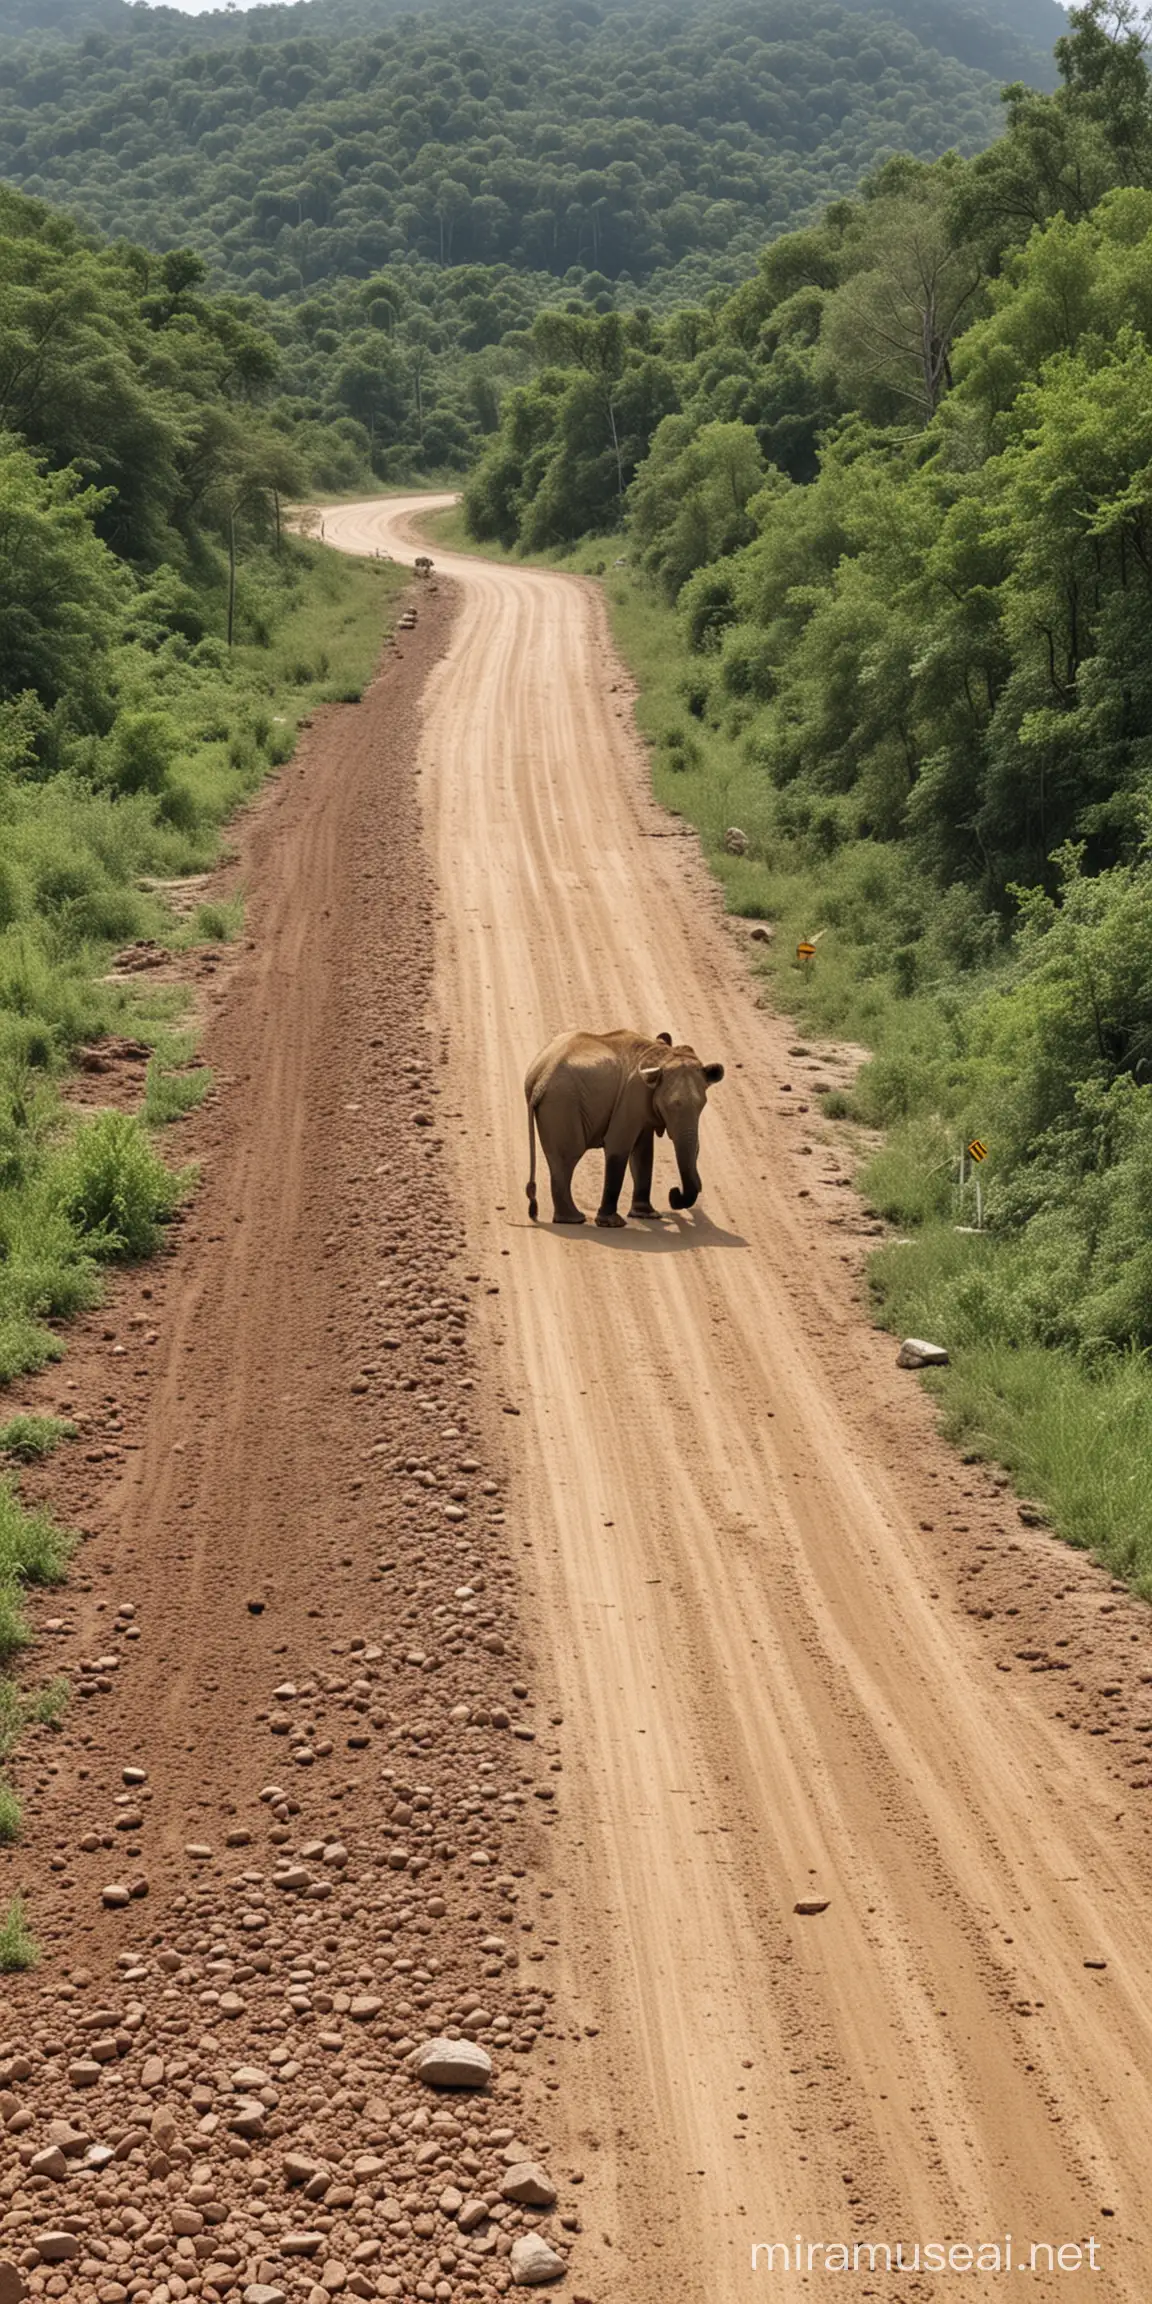 Impact of Road Construction on Animal Habitat